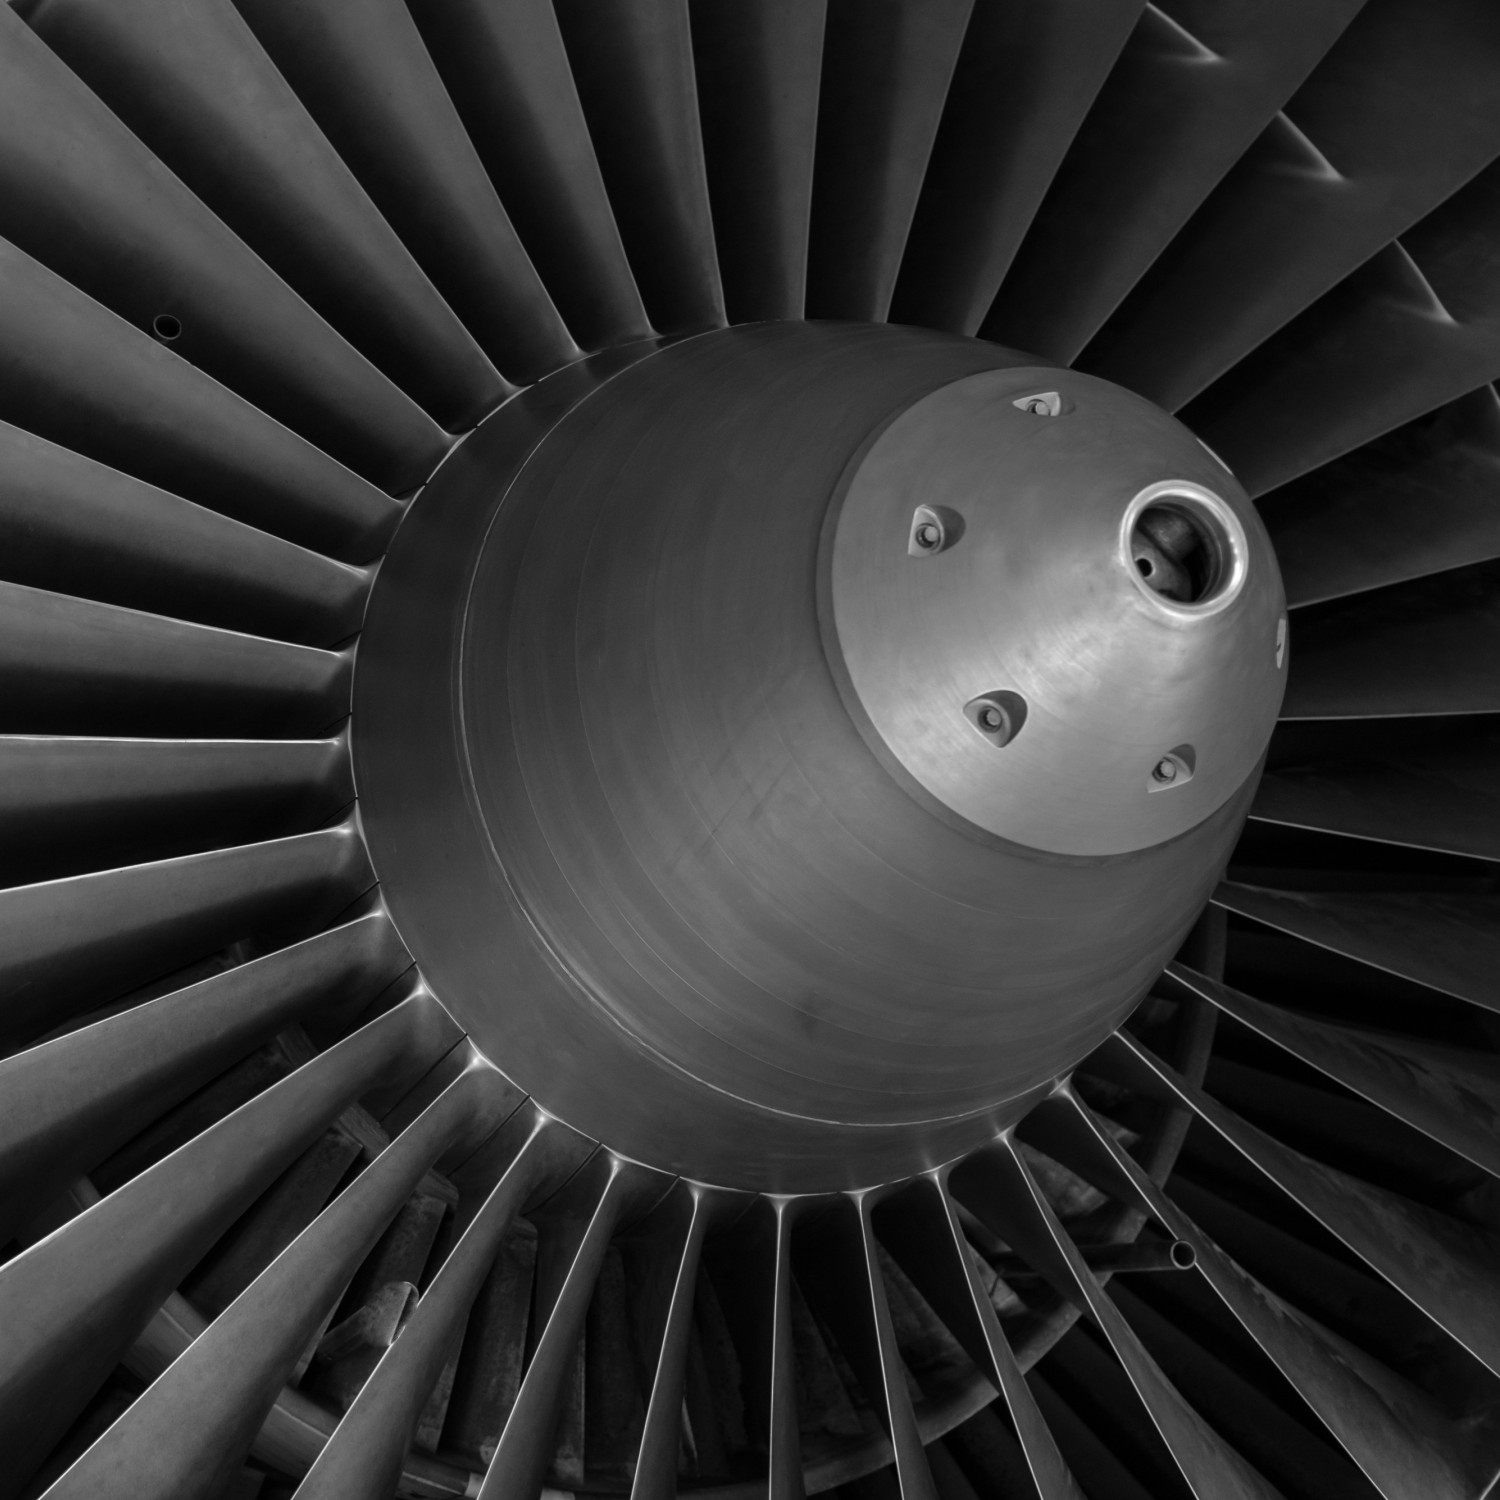 Airplane engine fan